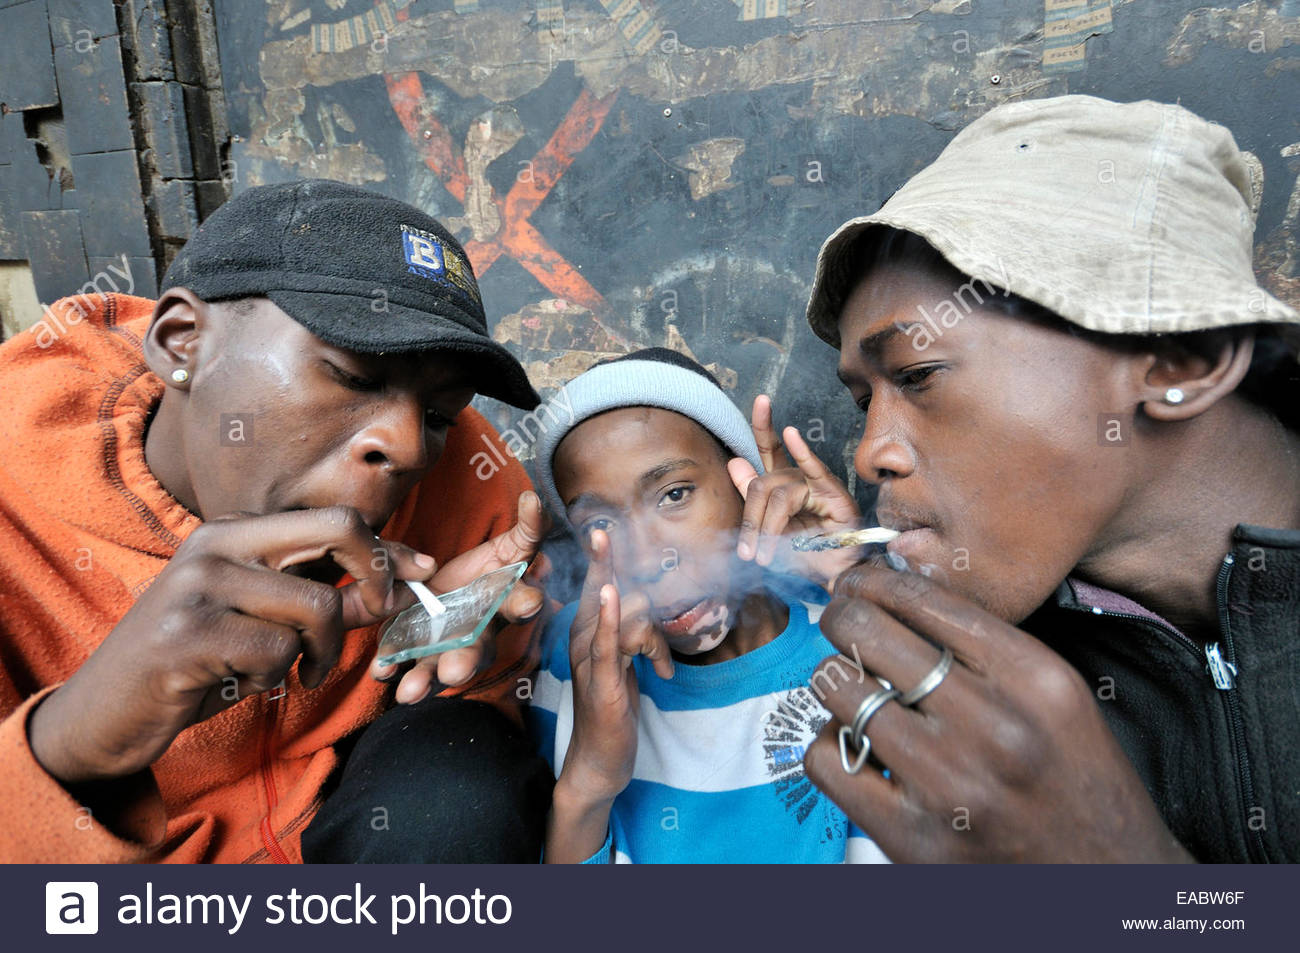 sudafrika-johannesburg-hillbrow-strasse-kinder-konsumieren-drogen-eabw6f.jpg